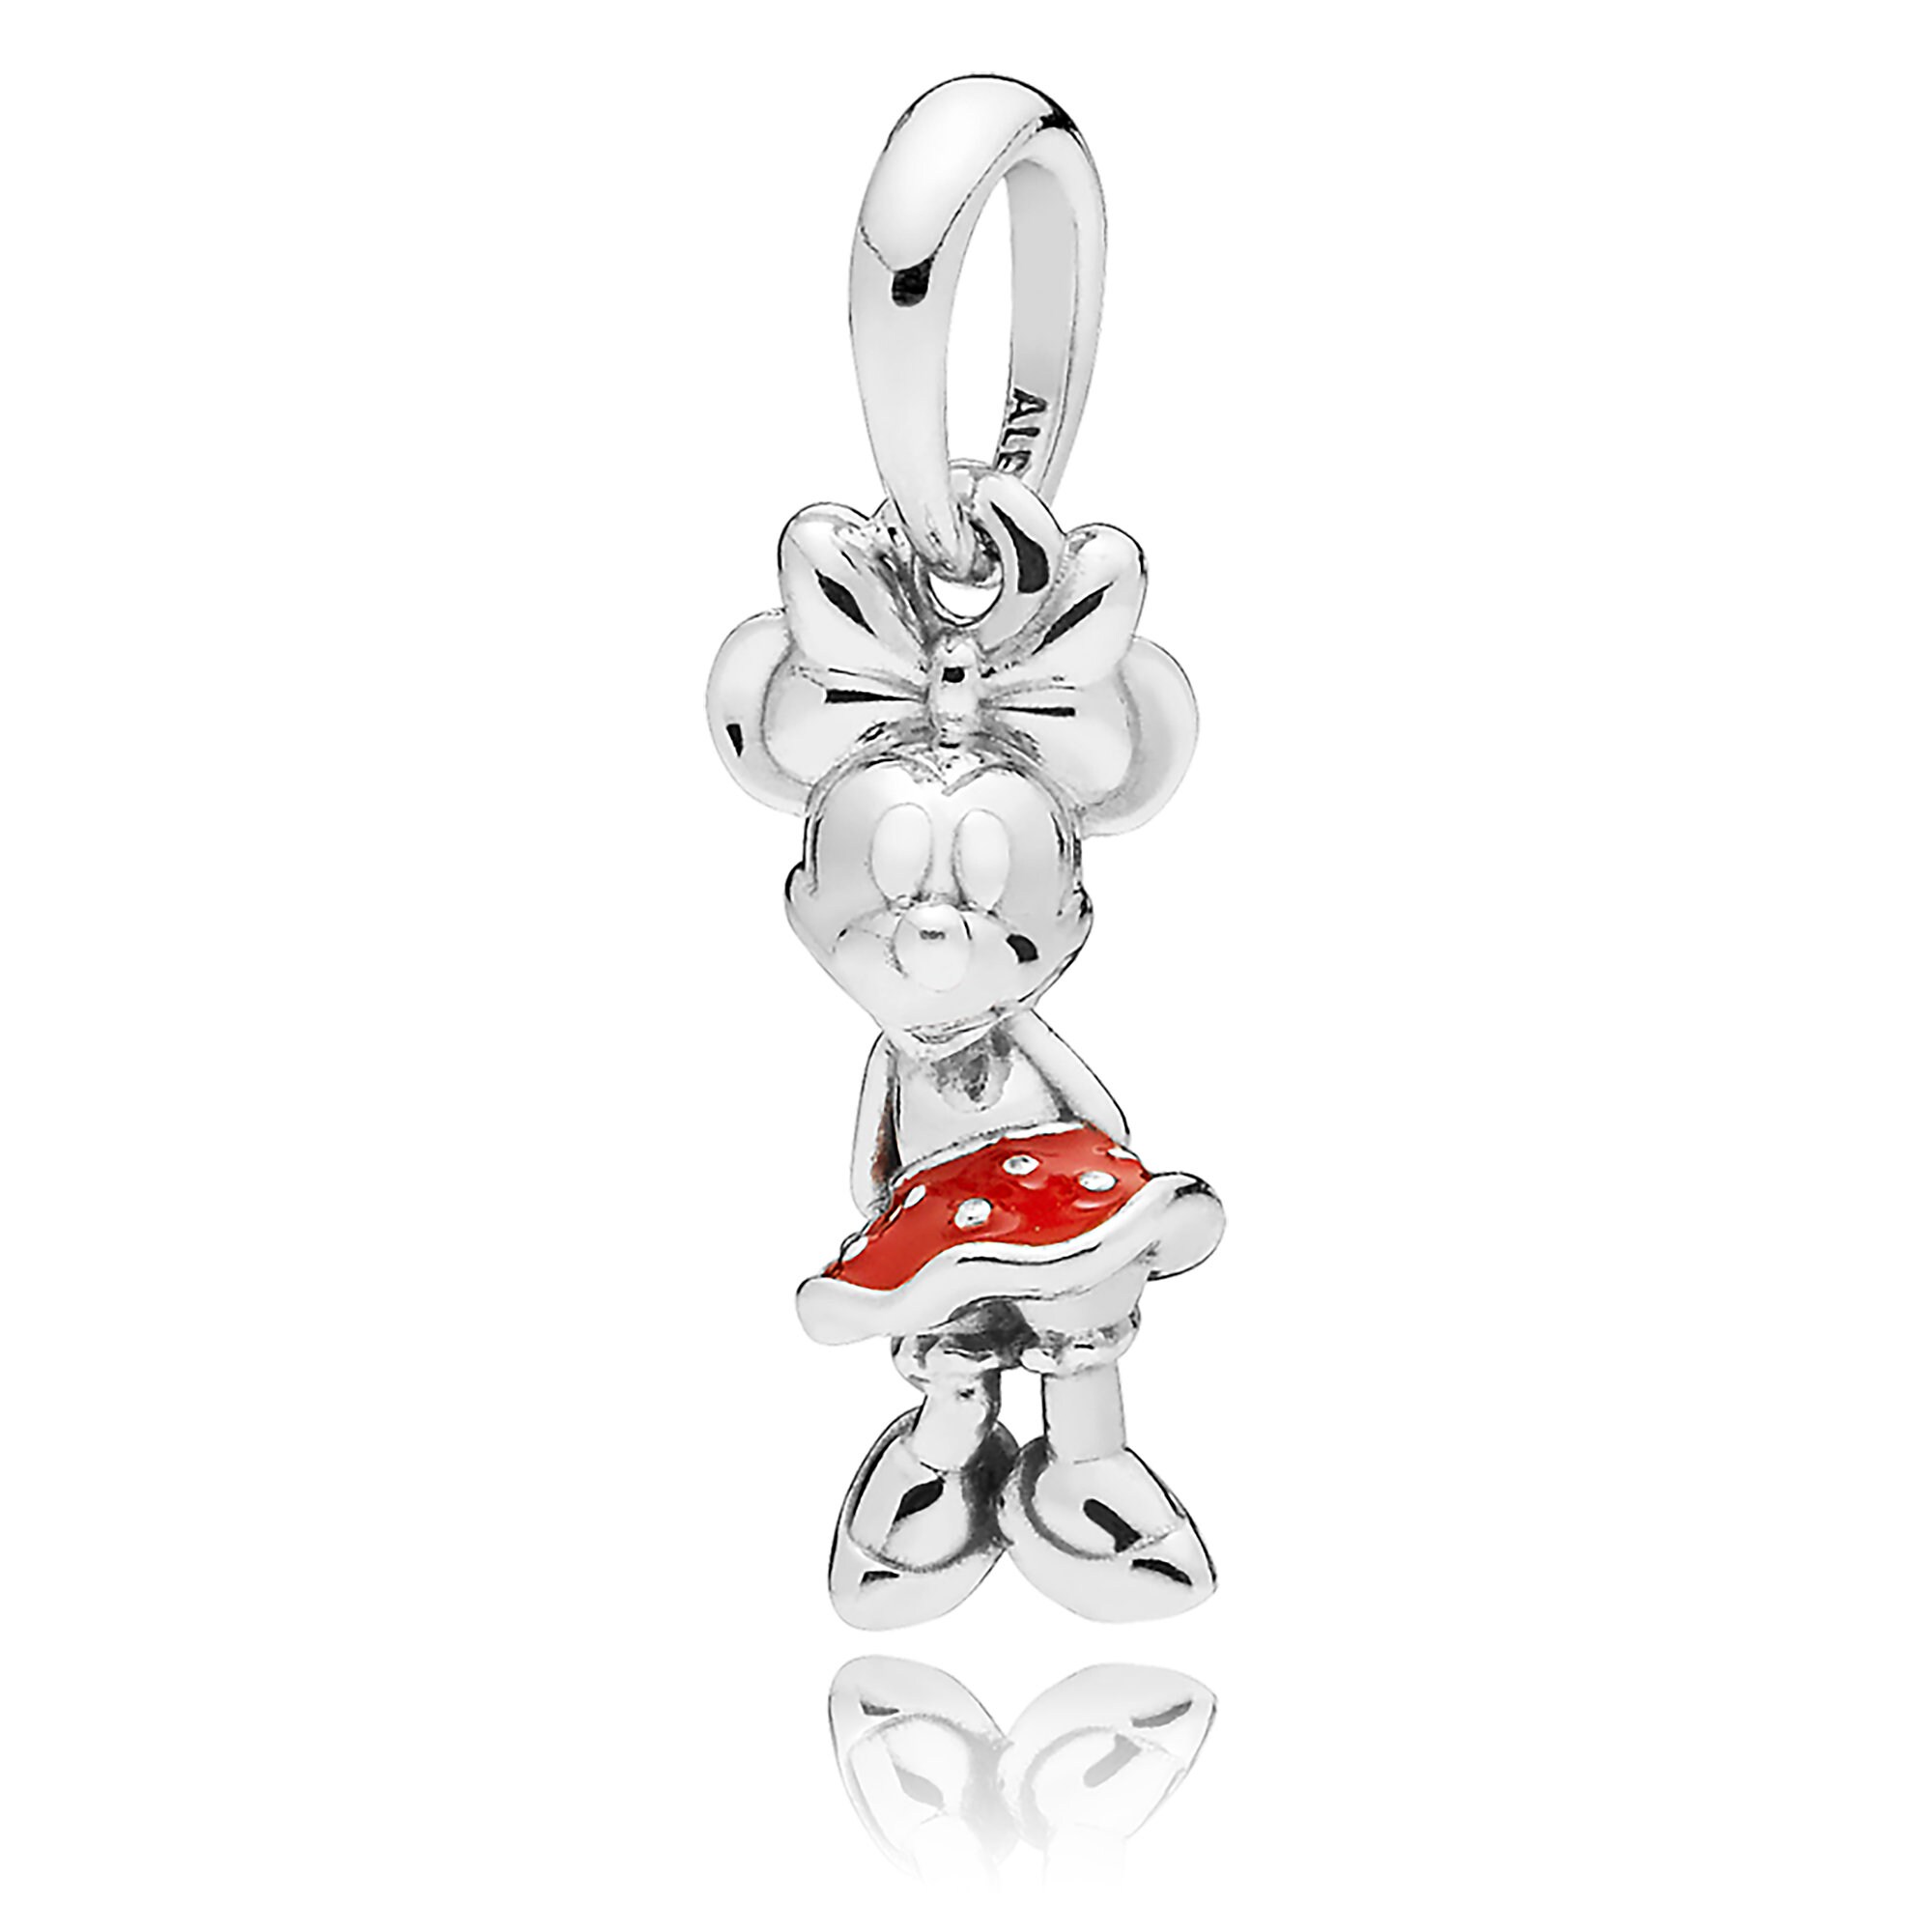 Minnie Mouse figural Charm by Pandora Jewelry